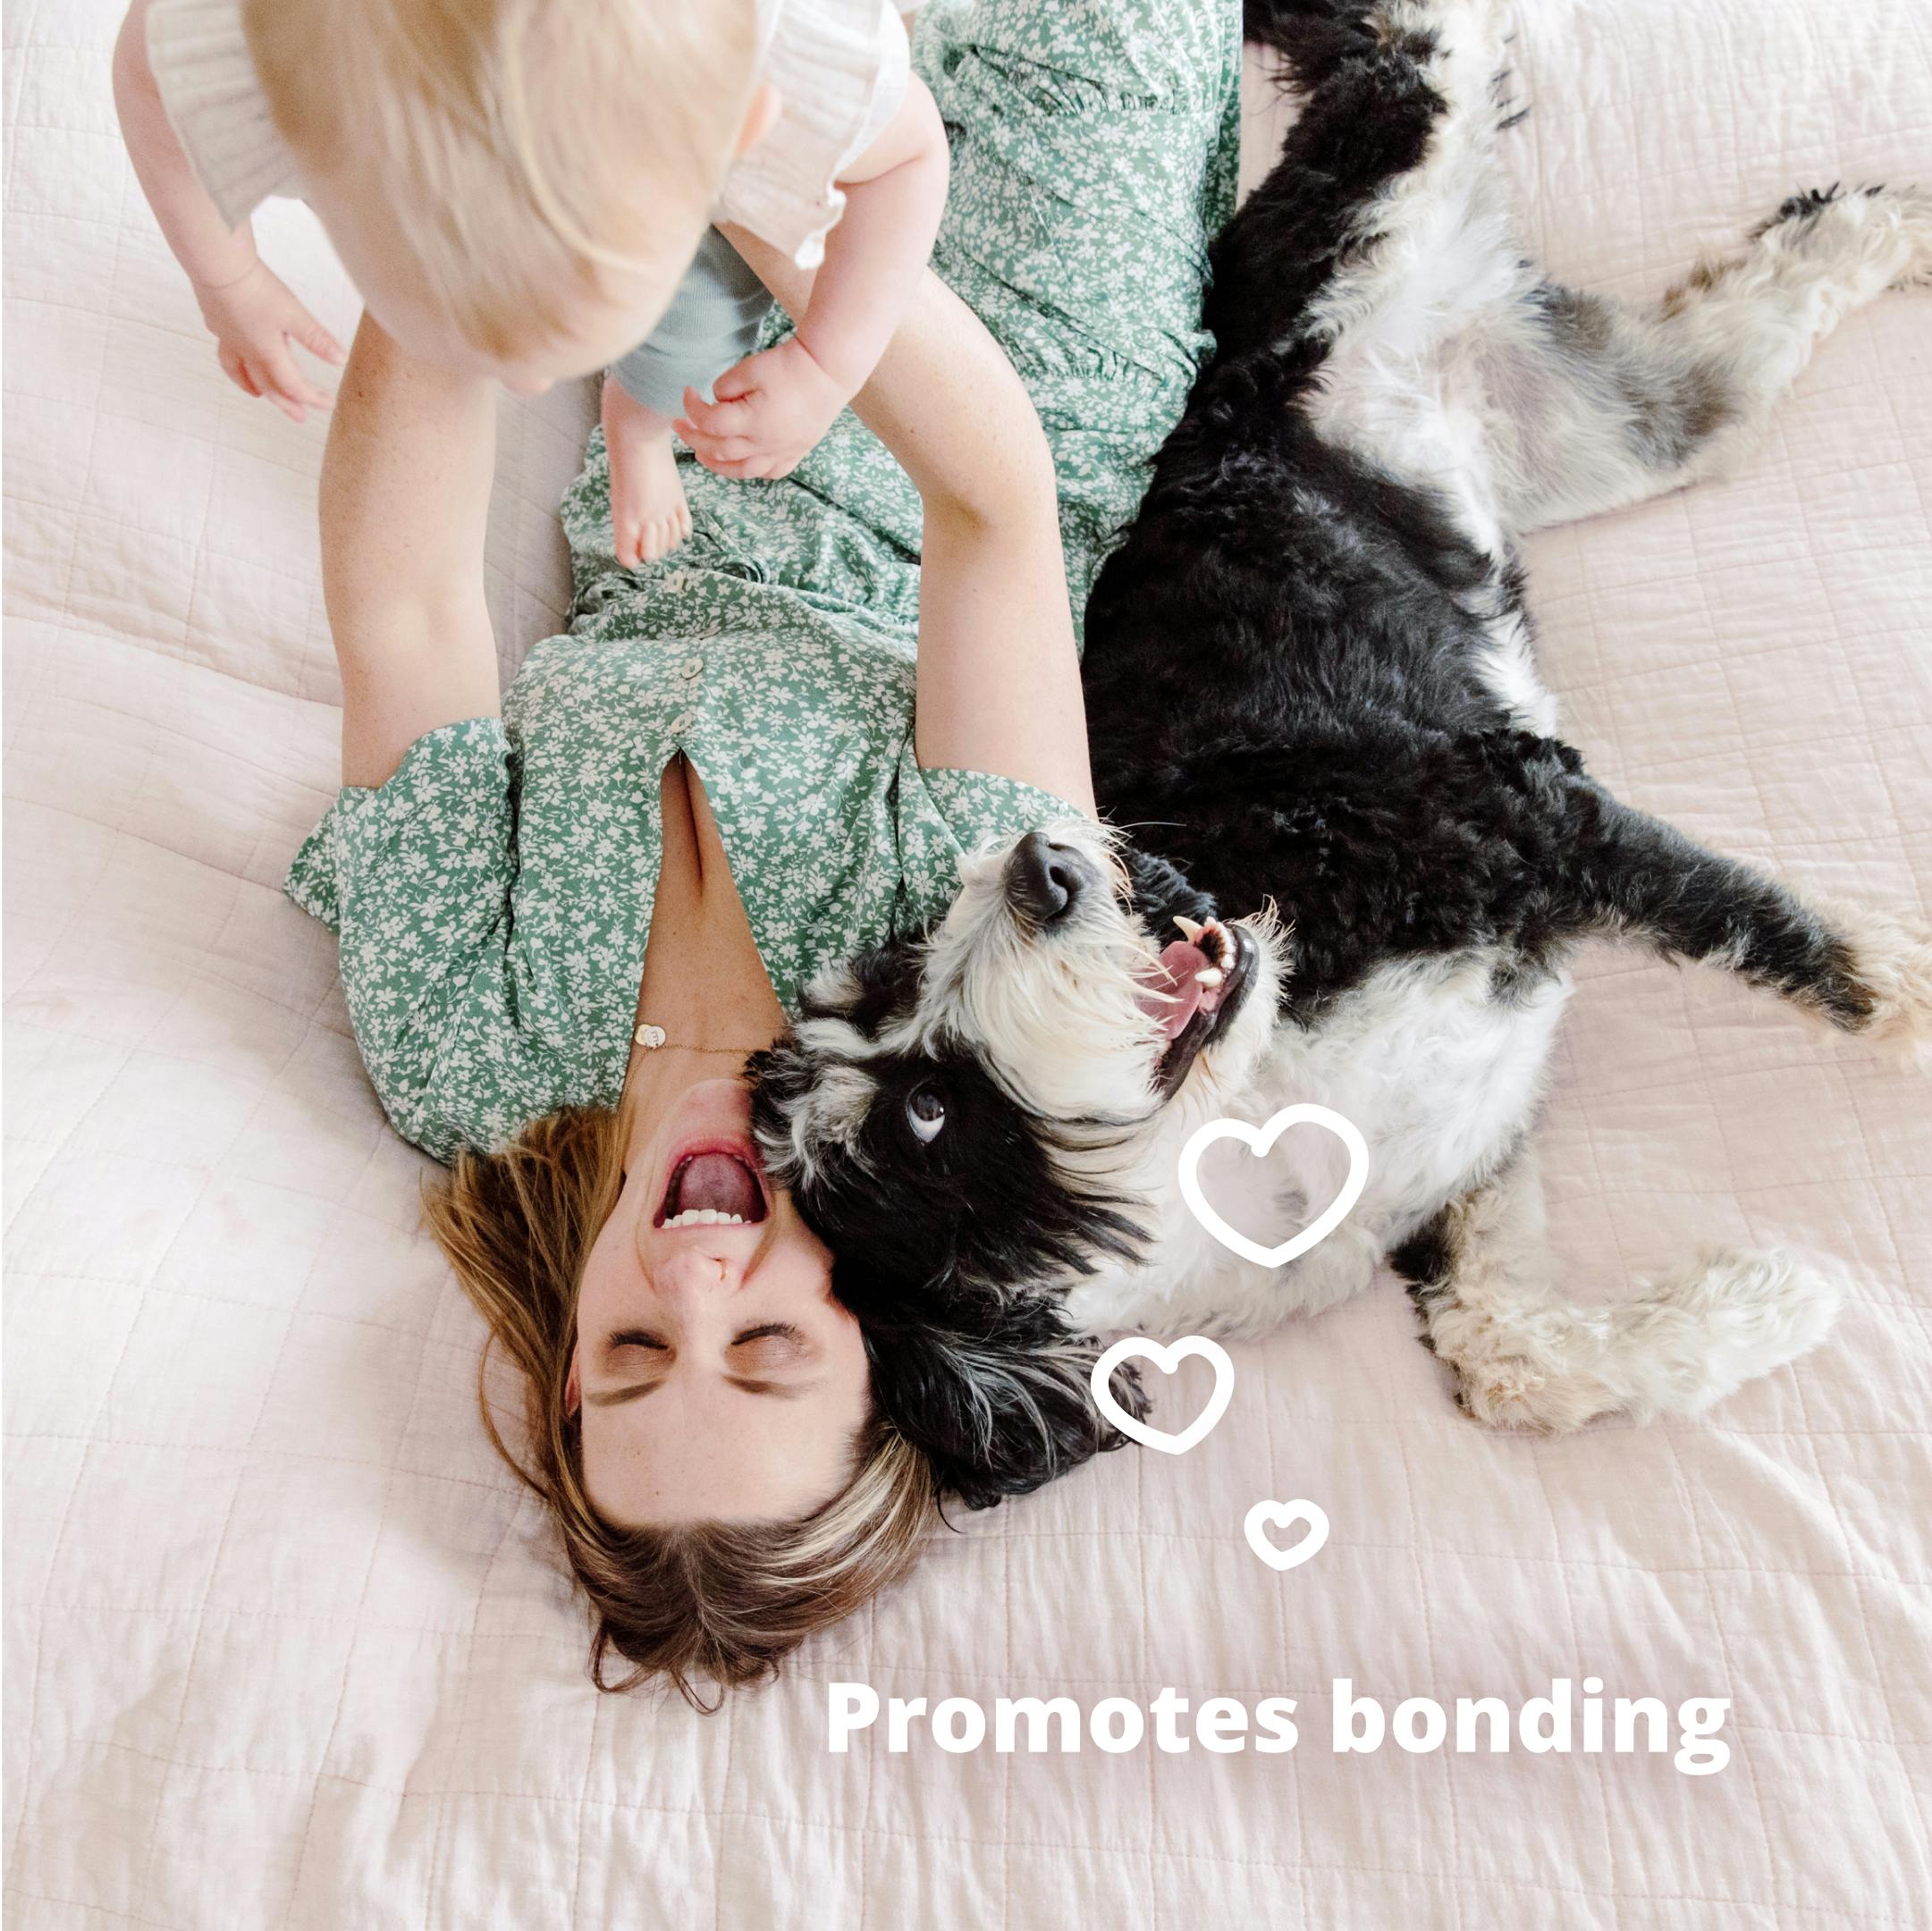 Promotes bonding